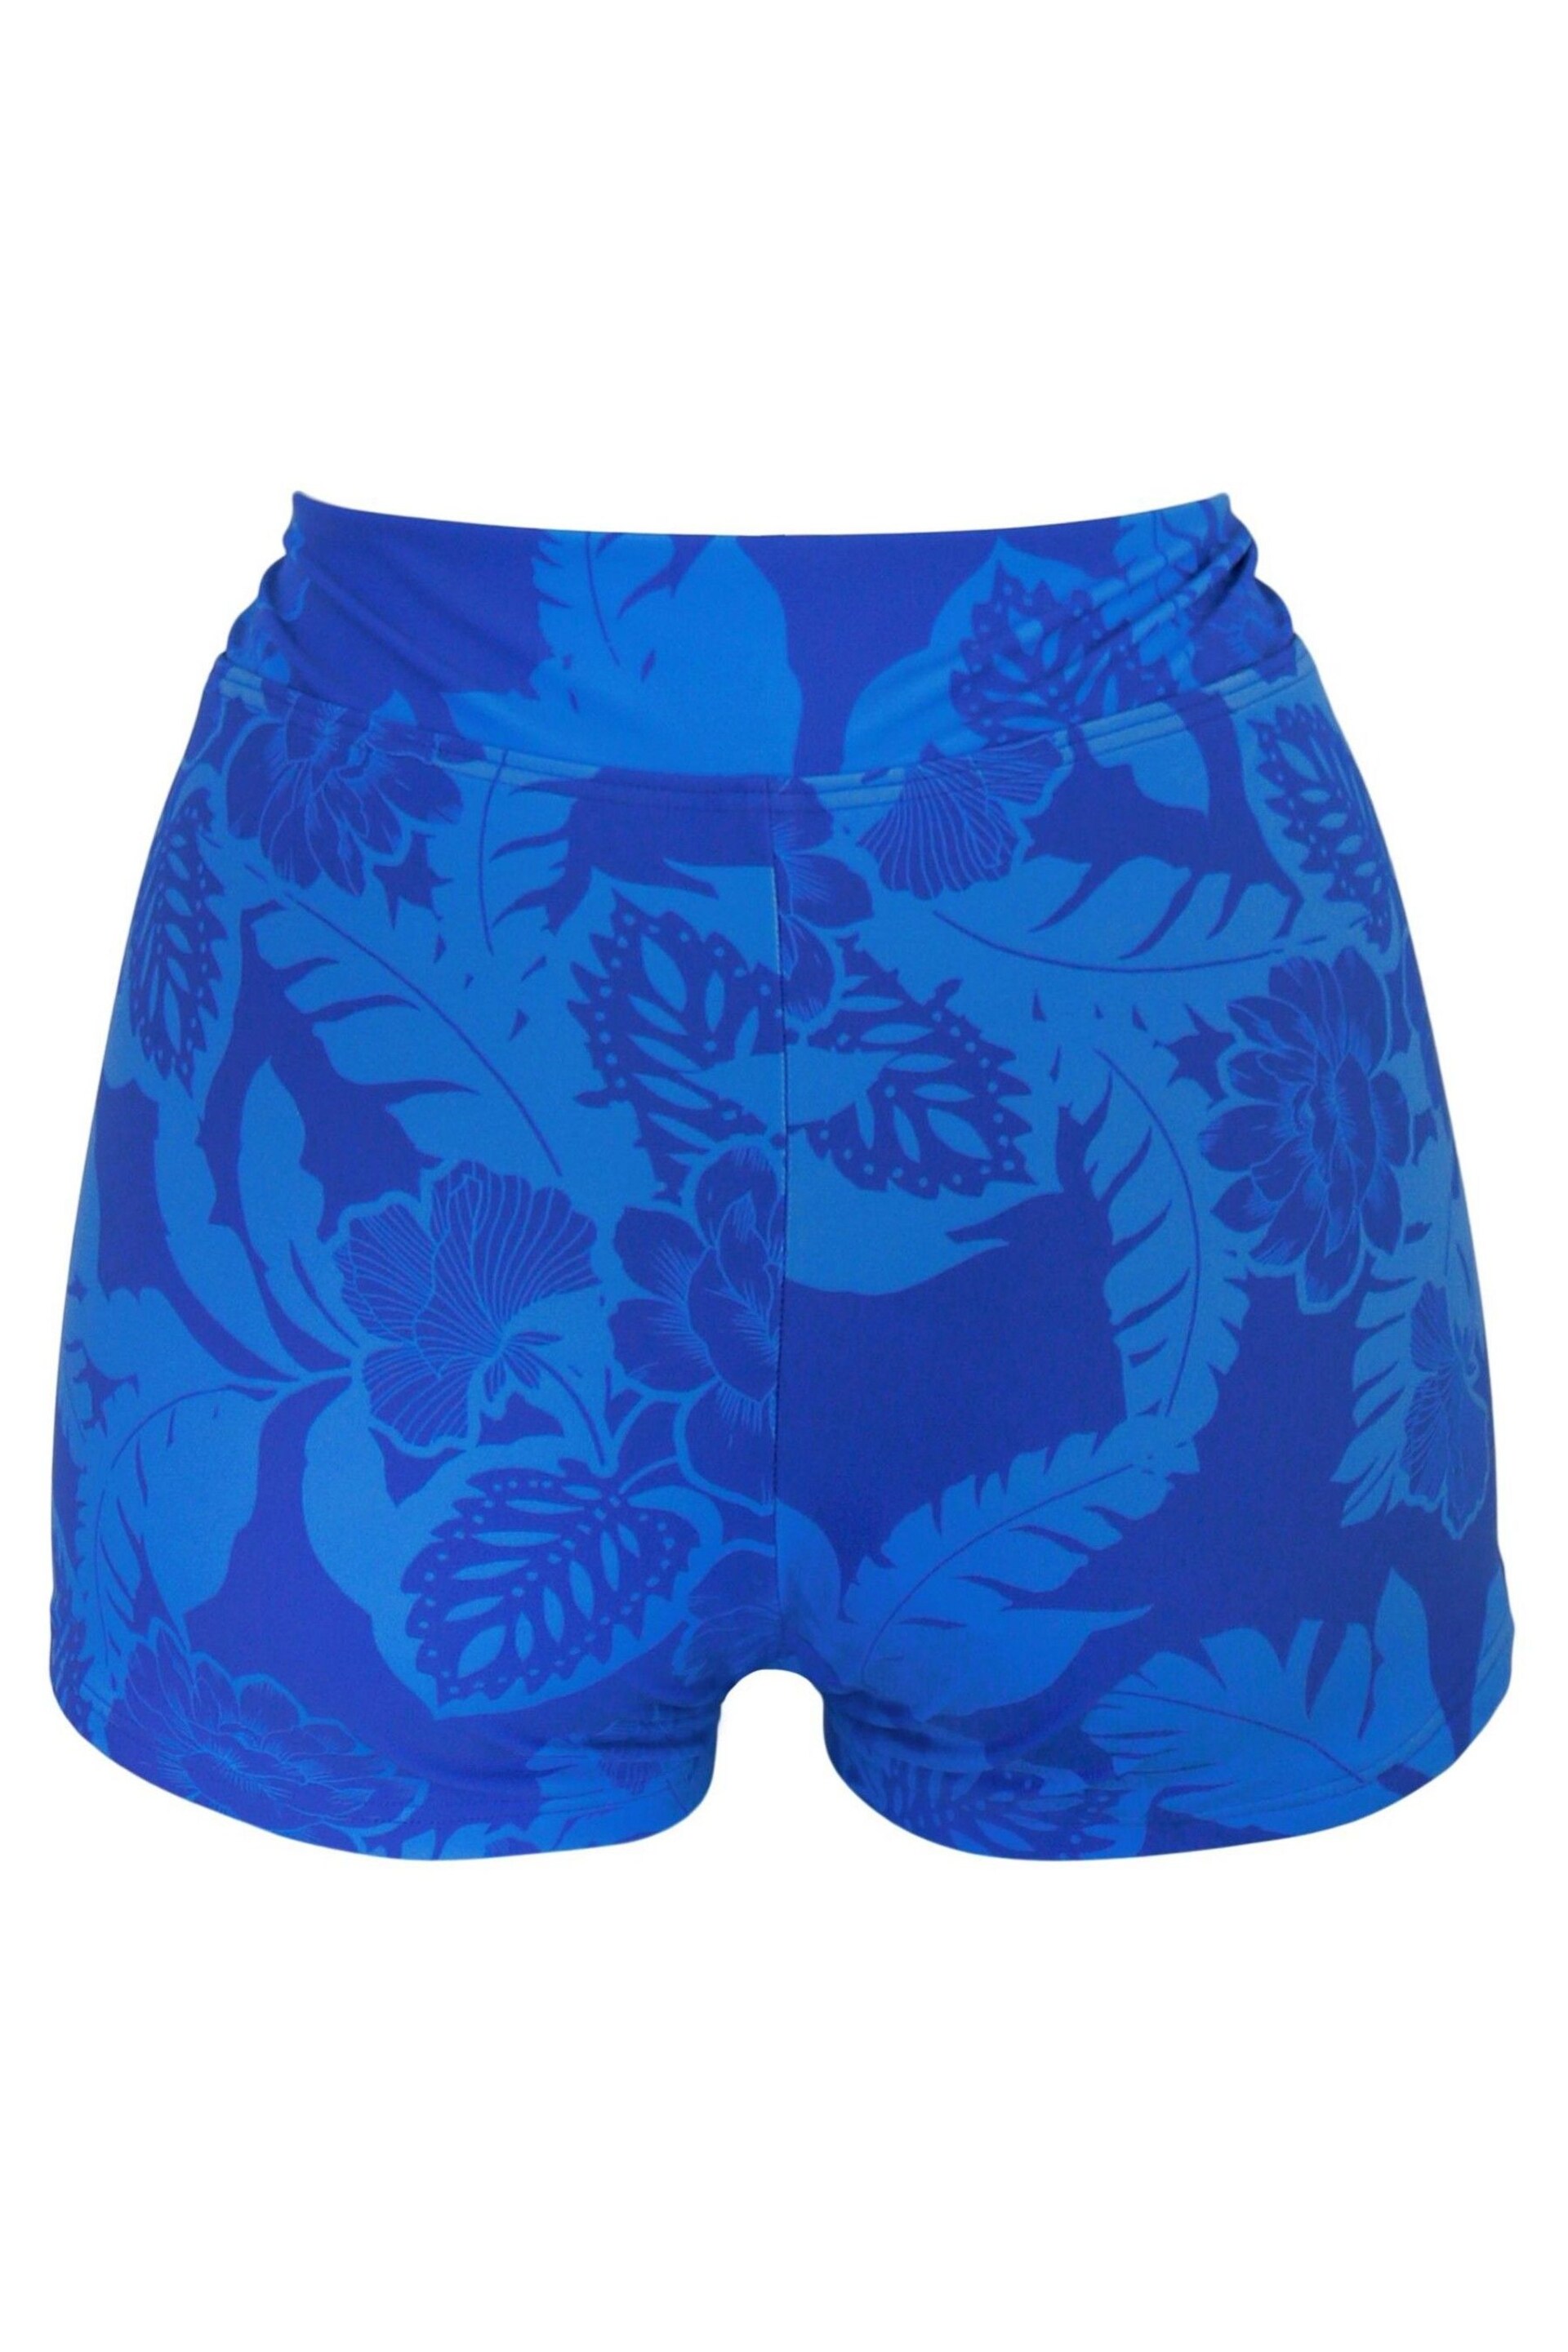 Pour Moi Blue Tropical Maui High Waist Shorts - Image 3 of 4